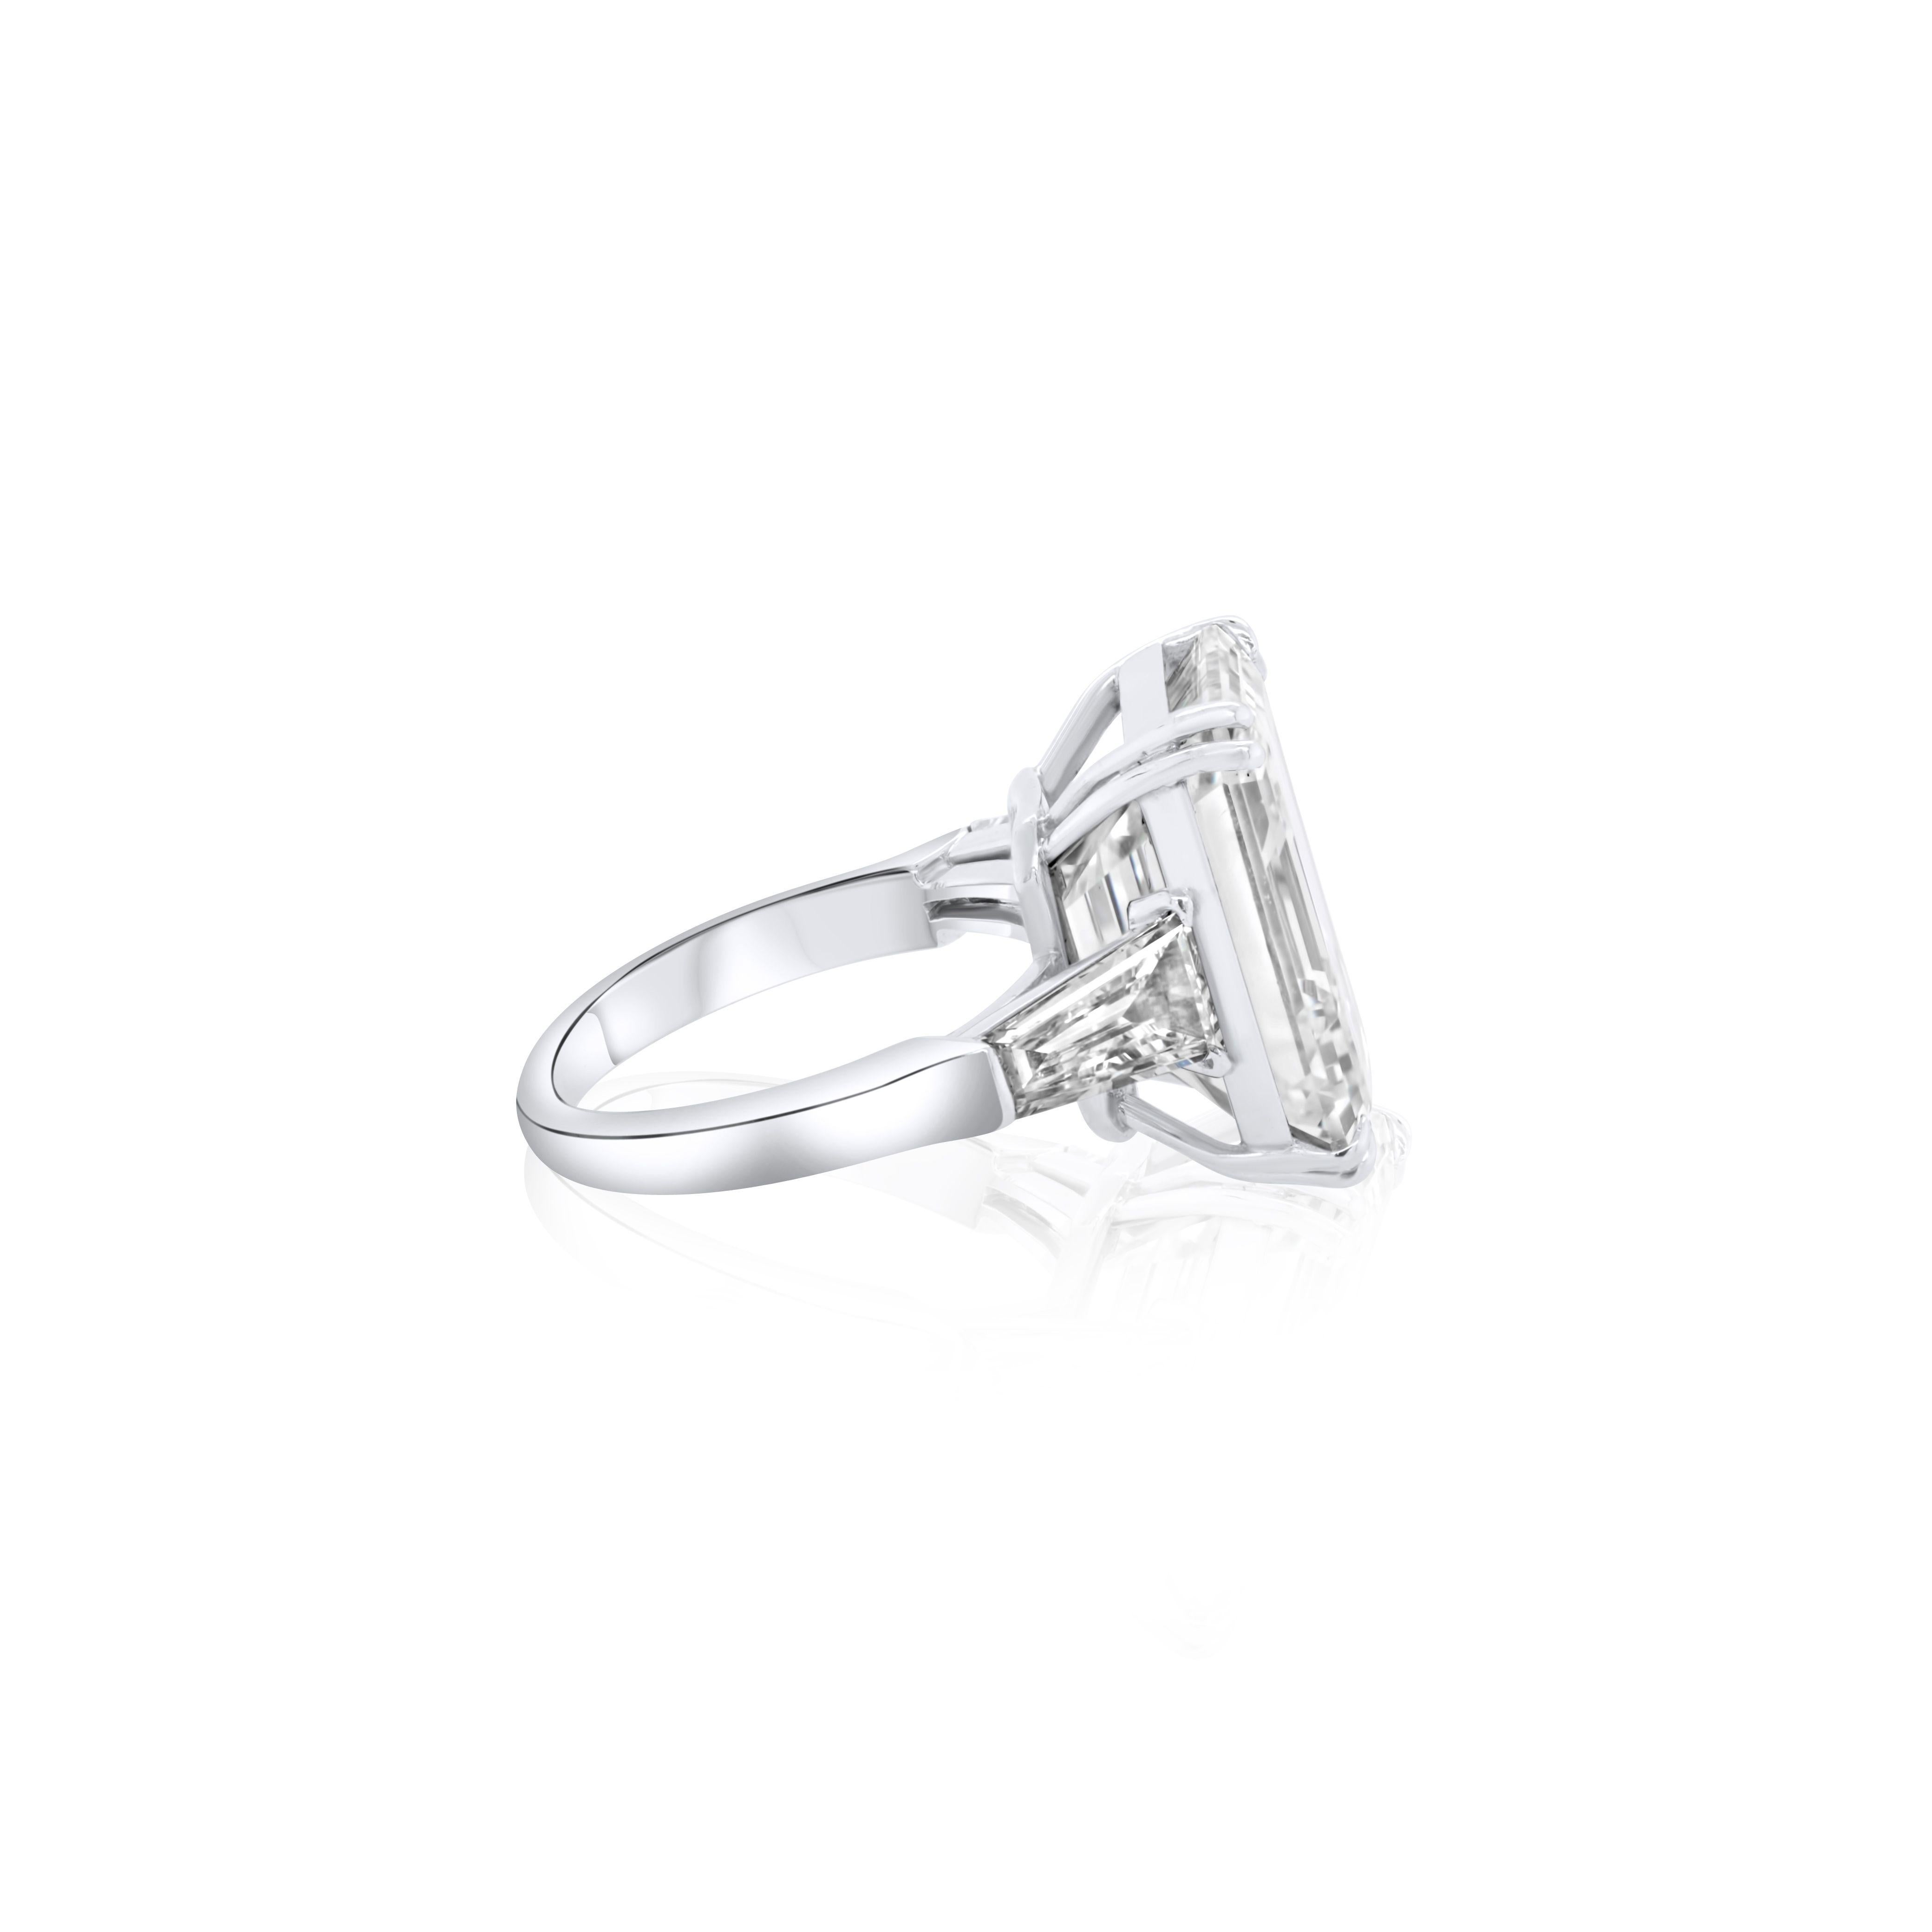 GIA Certified 11.34 Carat H-VS1 Emerald Cut Diamond Ring For Sale 3